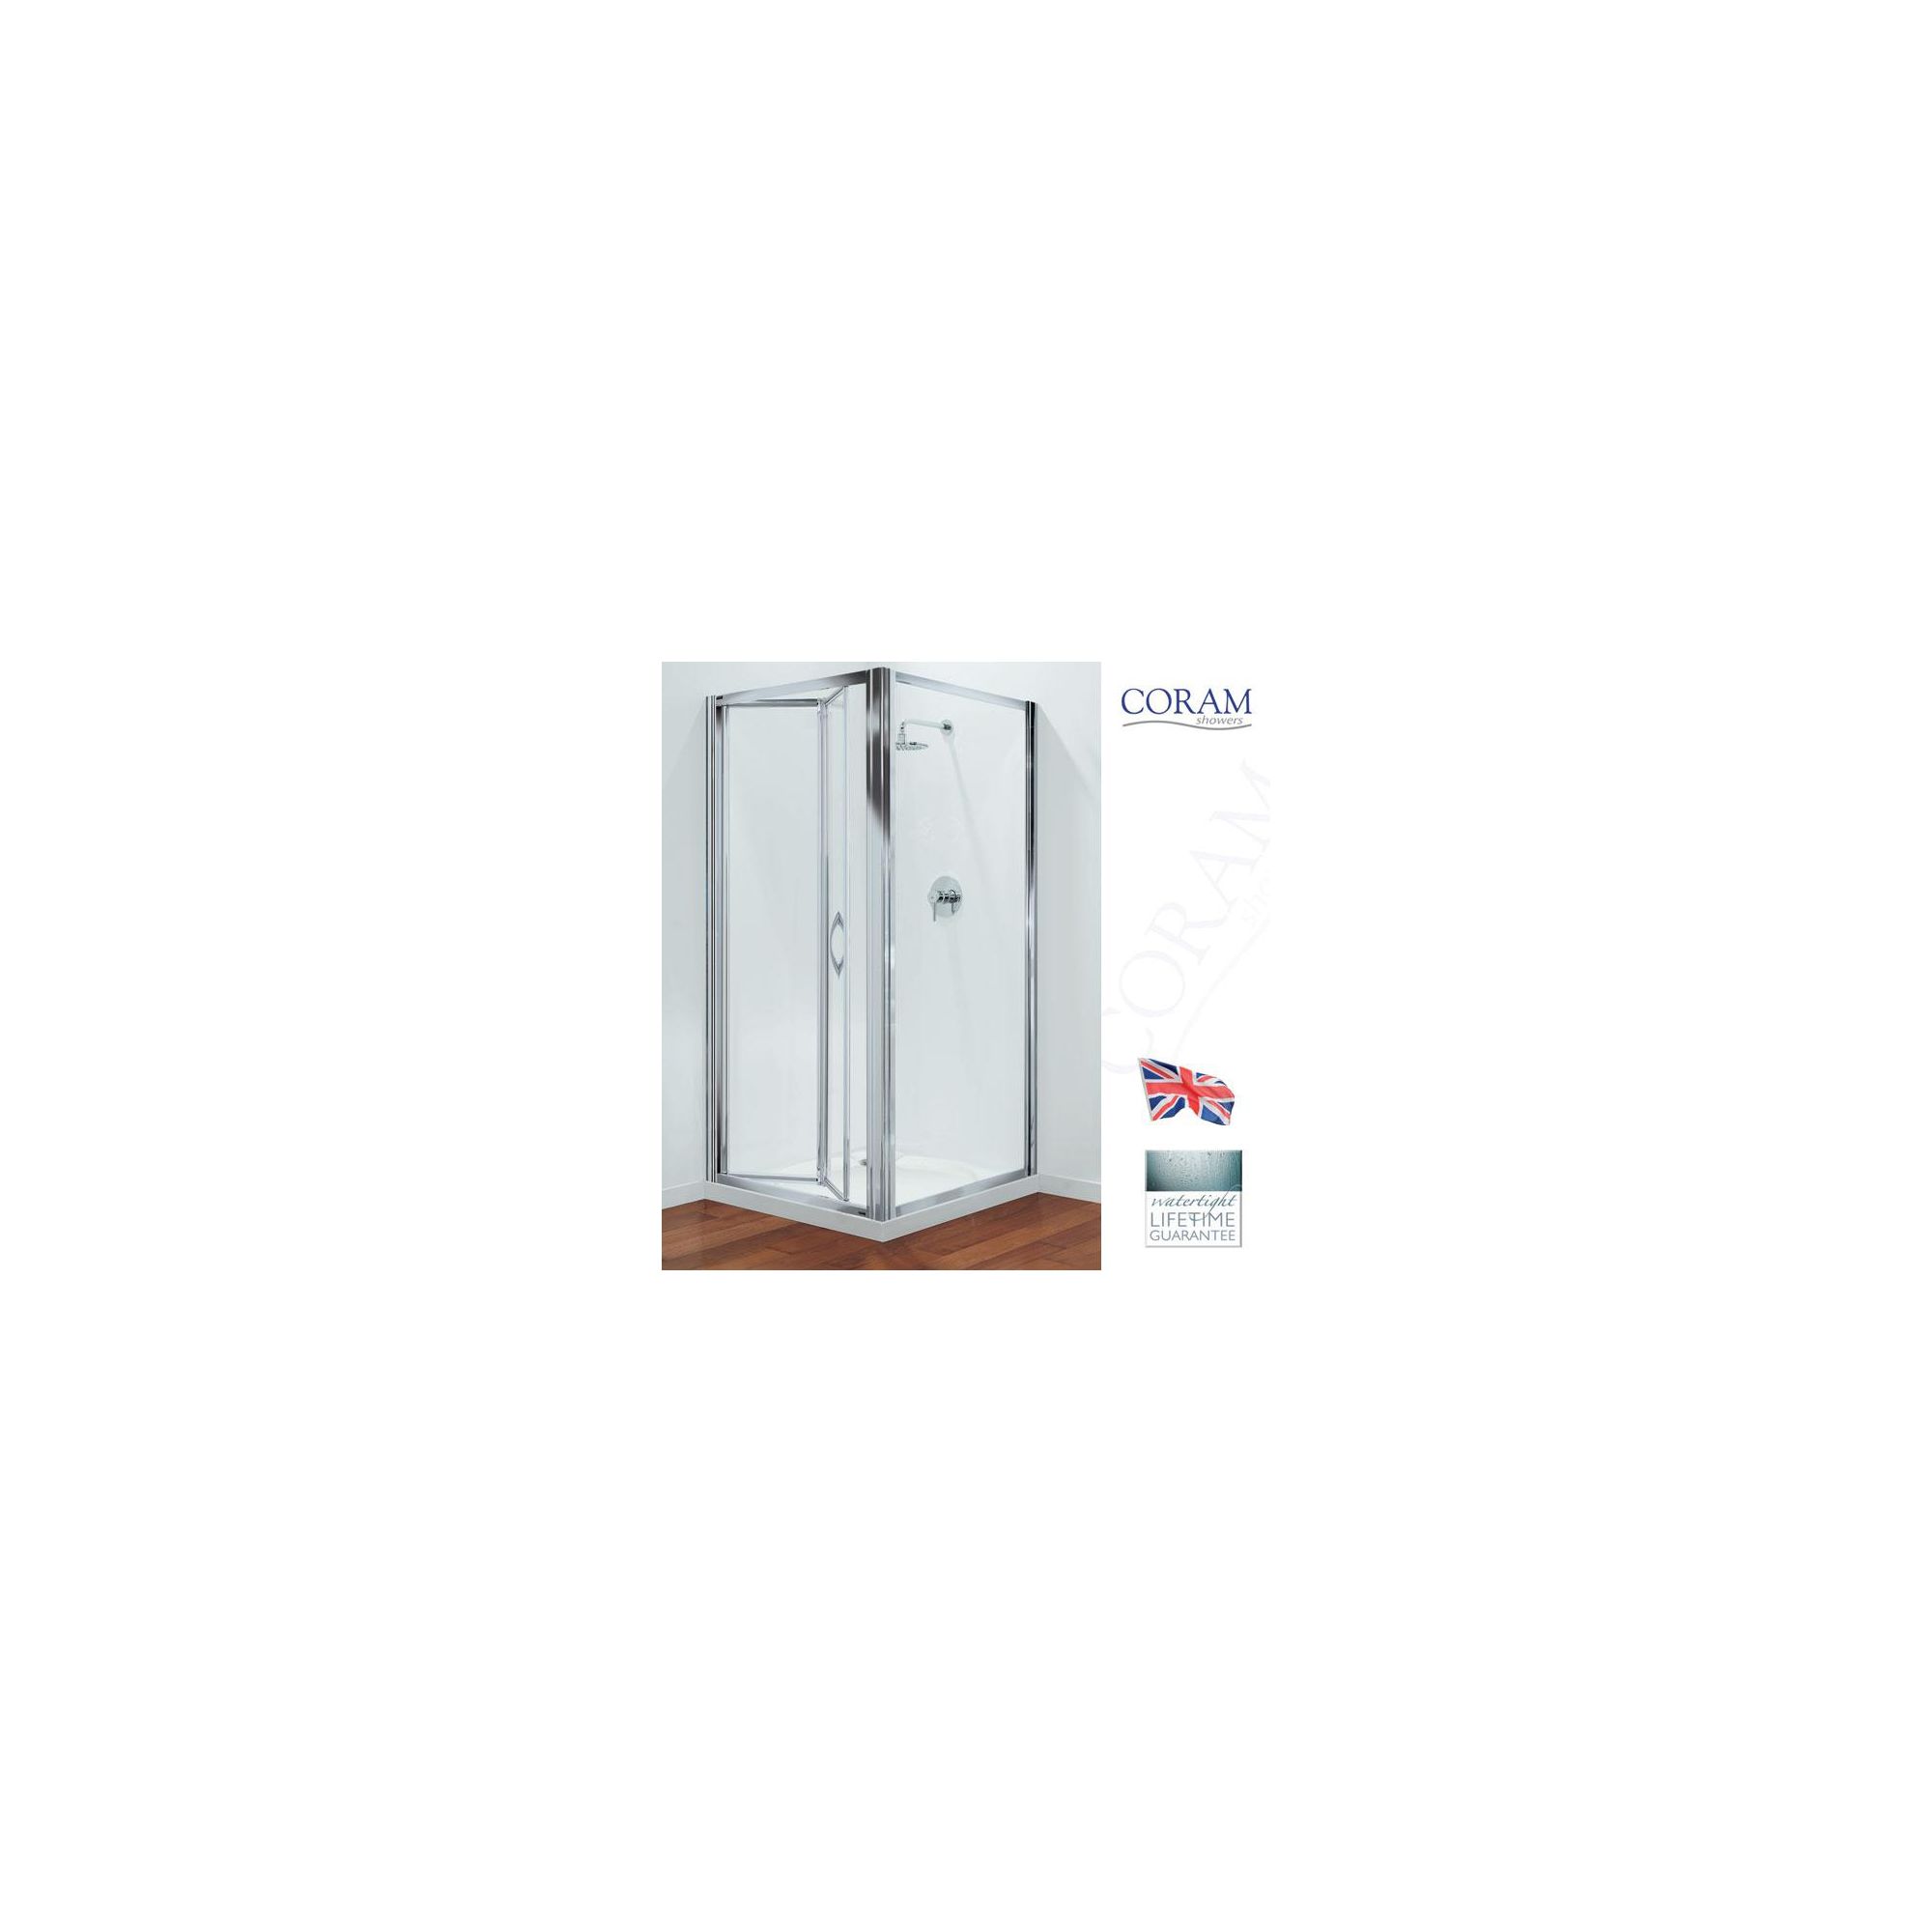 Coram Premier Bi-Fold Door Shower Enclosure, 760mm x 760mm, Low Profile Tray, 6mm Glass at Tesco Direct